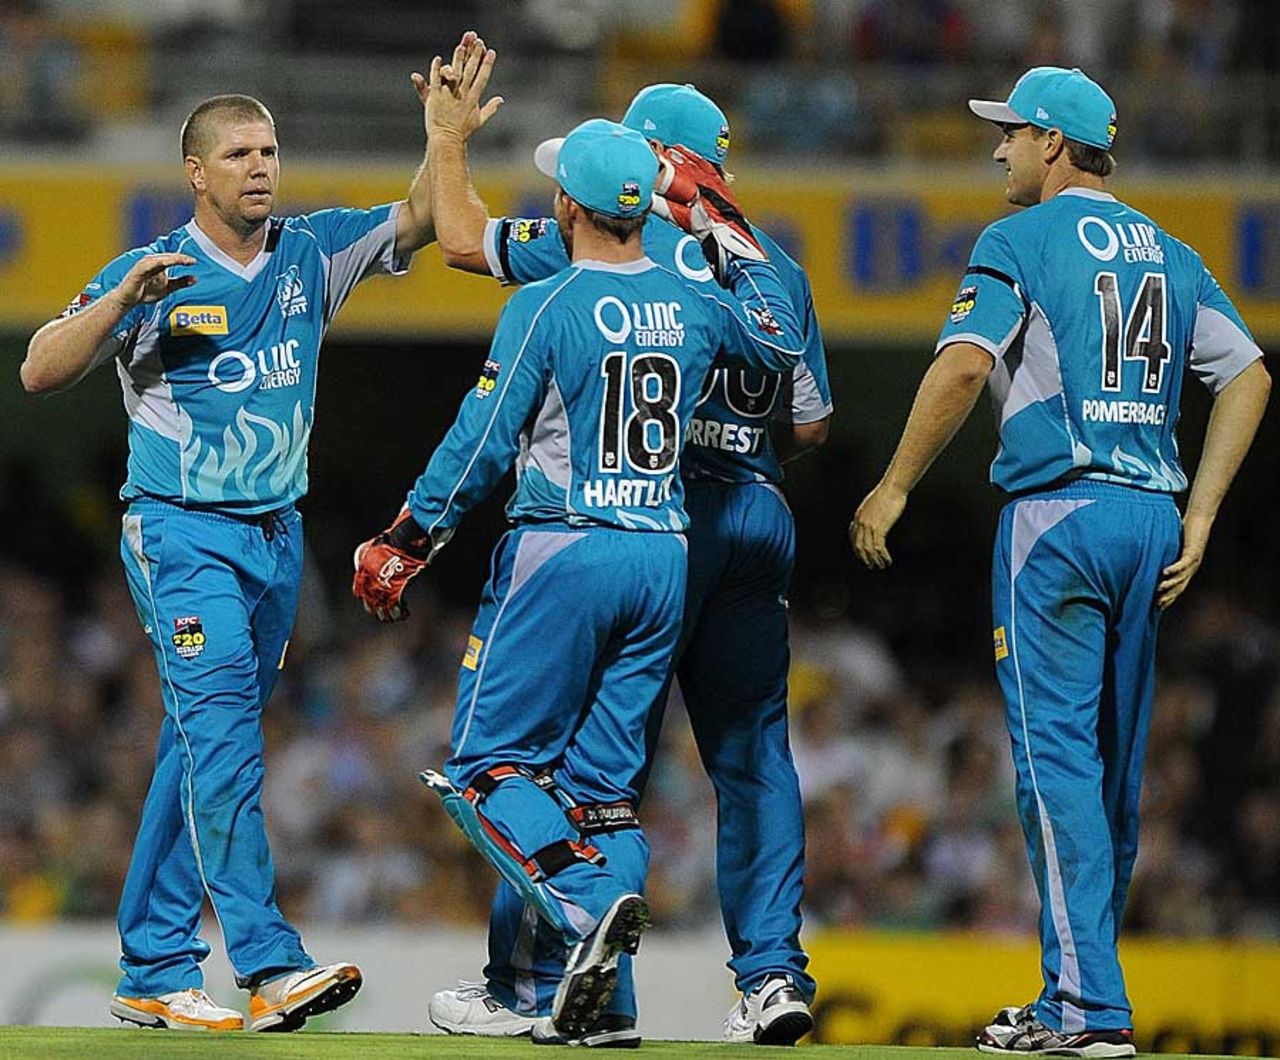 James Hopes picked up three wickets in Brisbane Heat's win, Brisbane Heat v Melbourne Stars, Big Bash League 2012-13, Brisbane, January 3, 2013